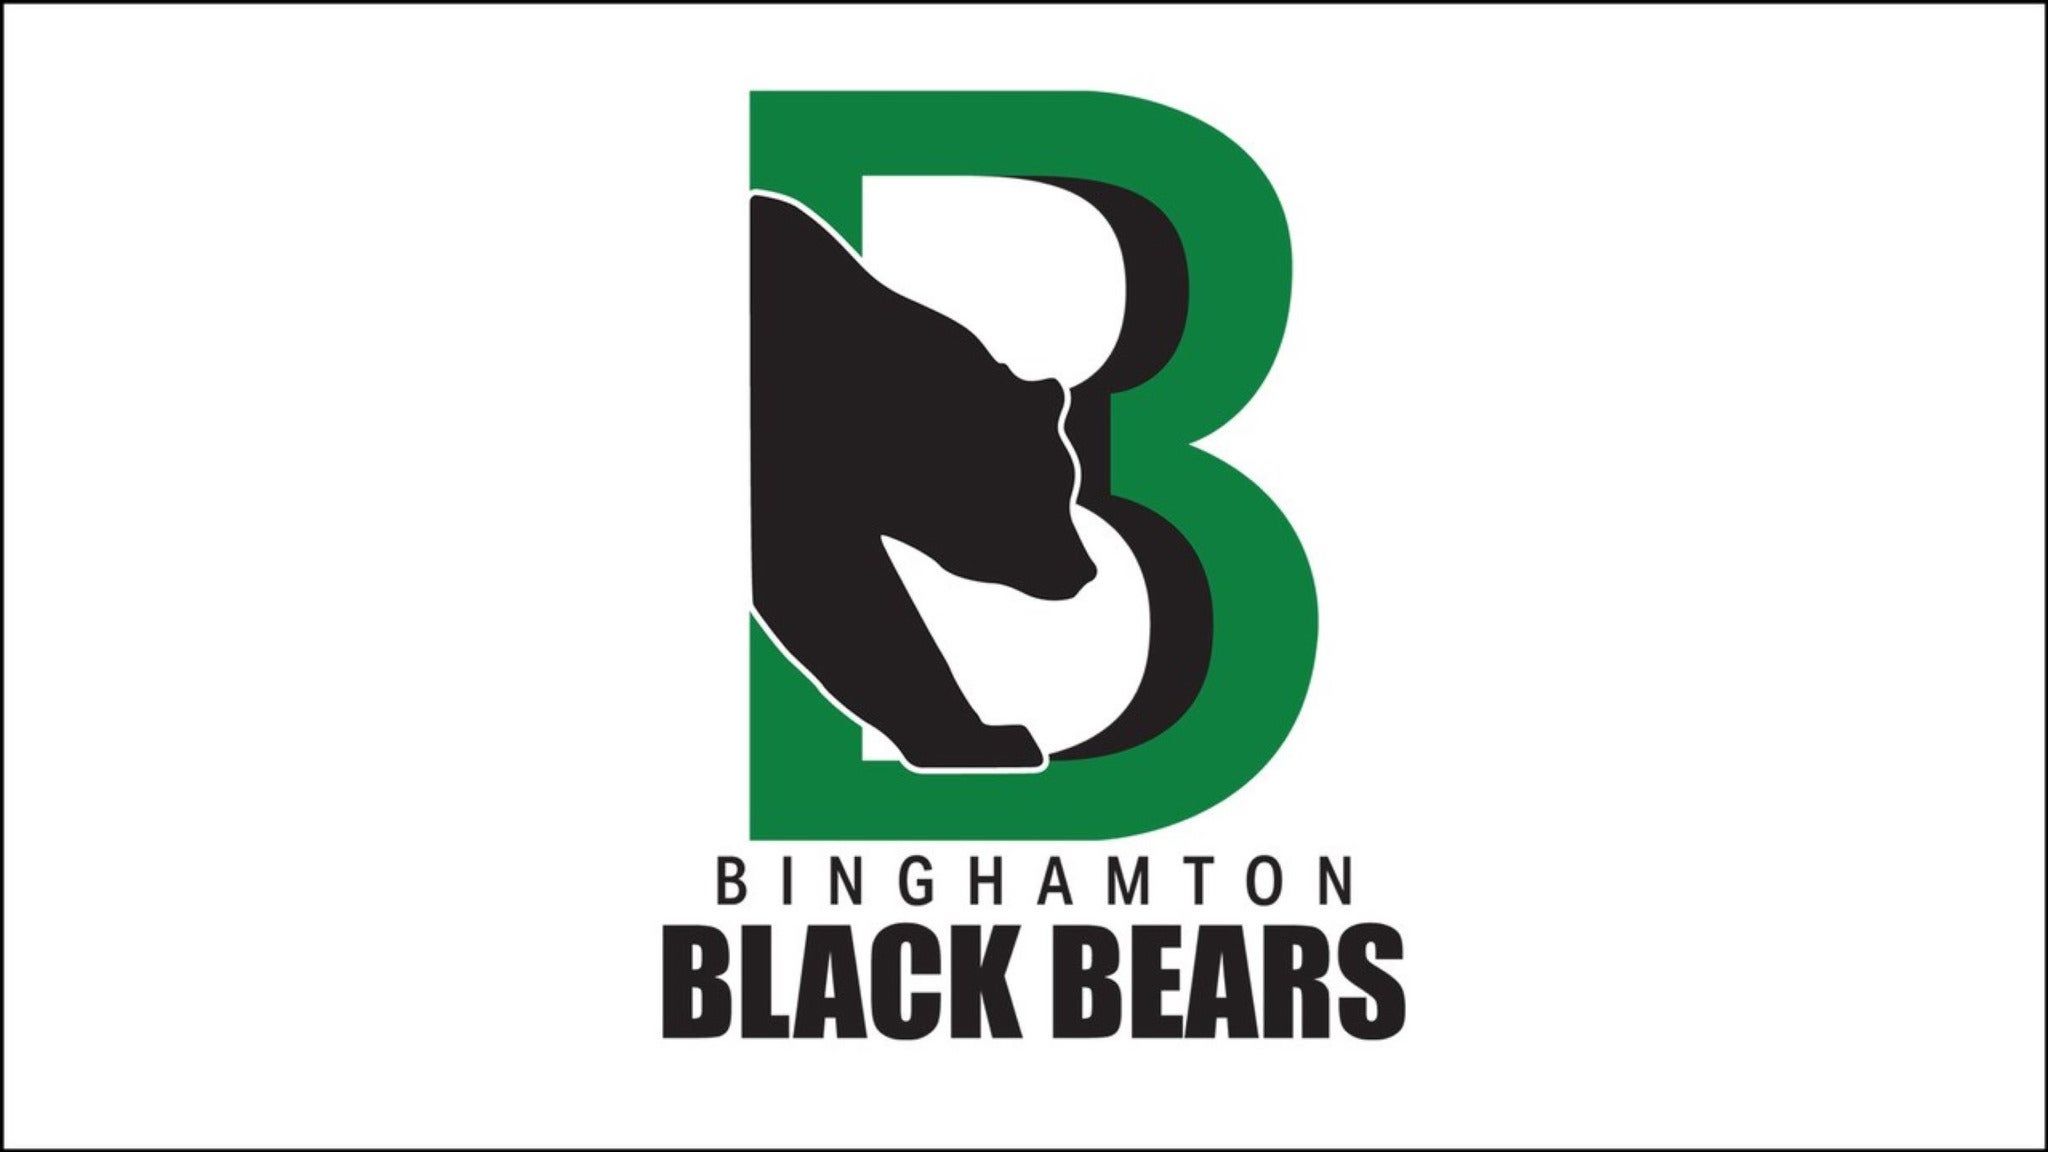 Buy Binghamton Black Bears Tickets